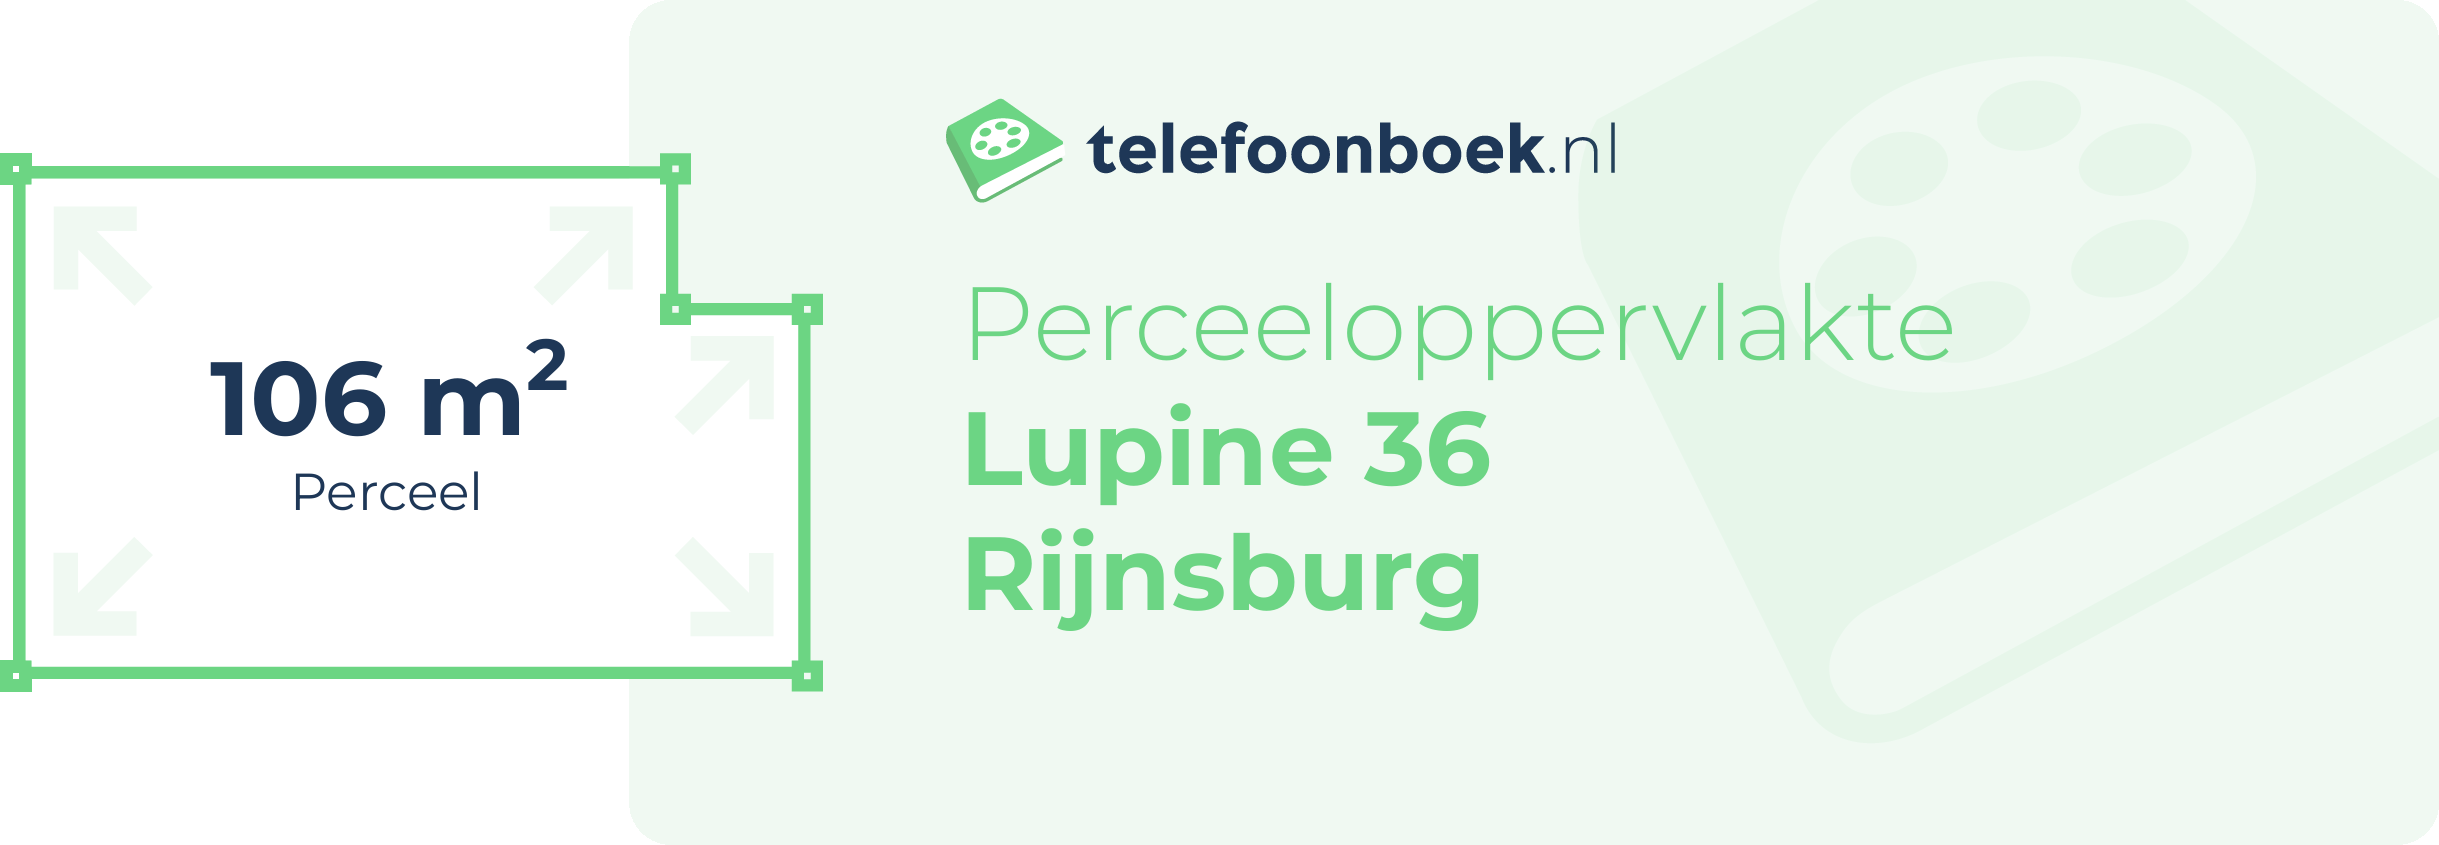 Perceeloppervlakte Lupine 36 Rijnsburg